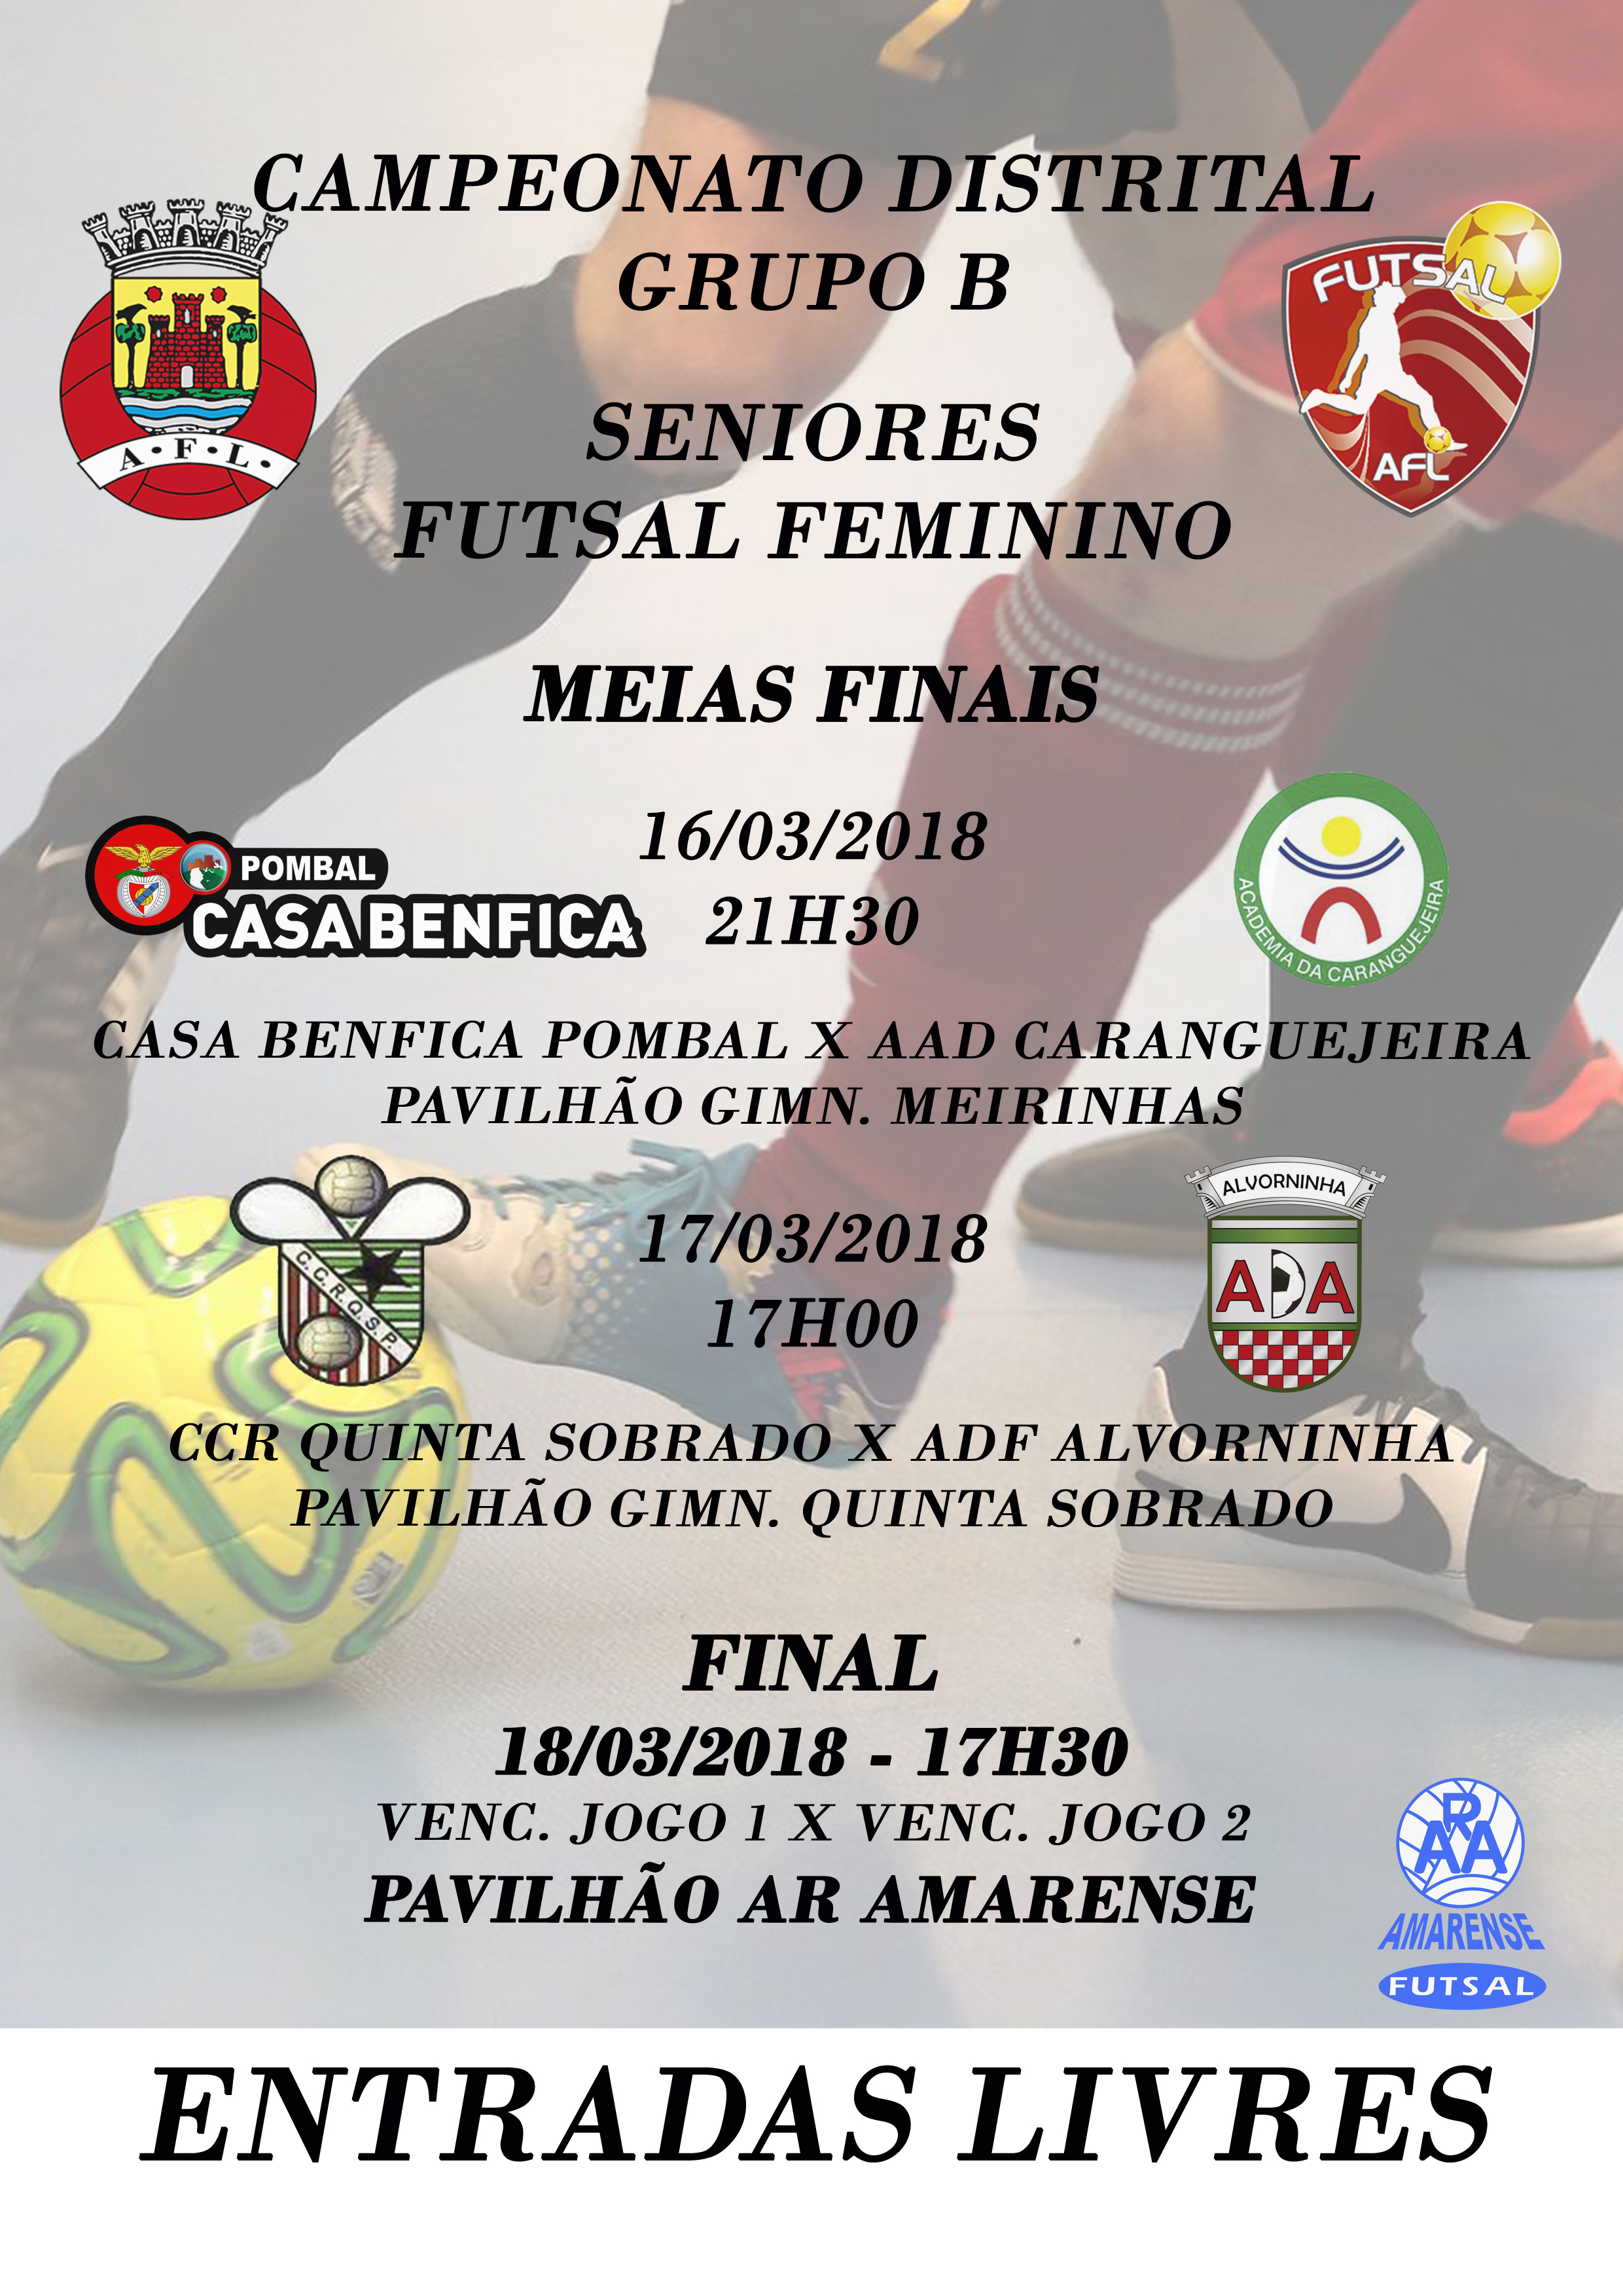 Campeonato Distrital - Grupo B - Seniores - Futsal Feminino!